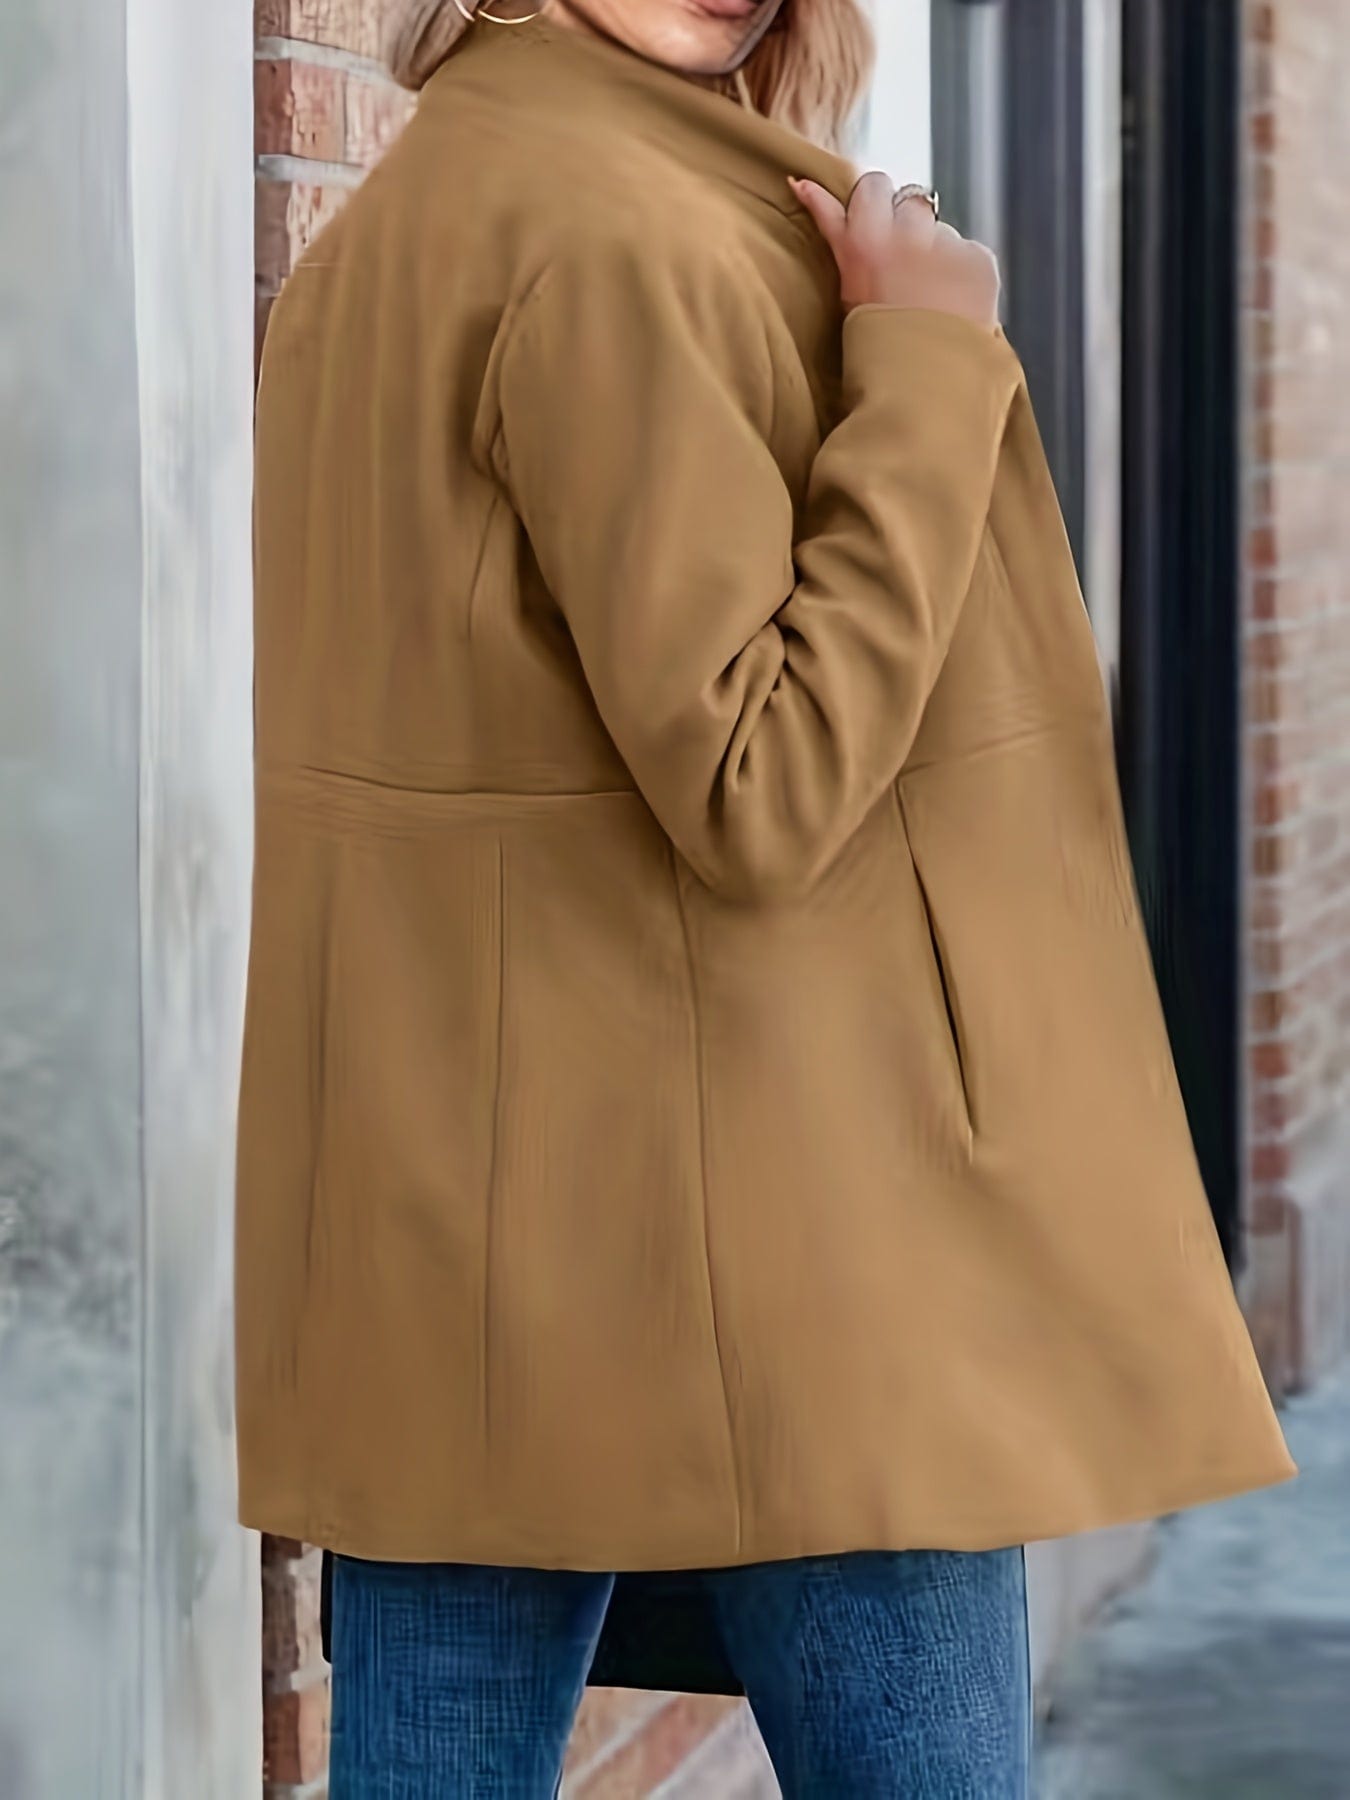 MsDressly Blazers Elegant Solid Stand Collar Pocket Open Front Long Sleeve Blazer